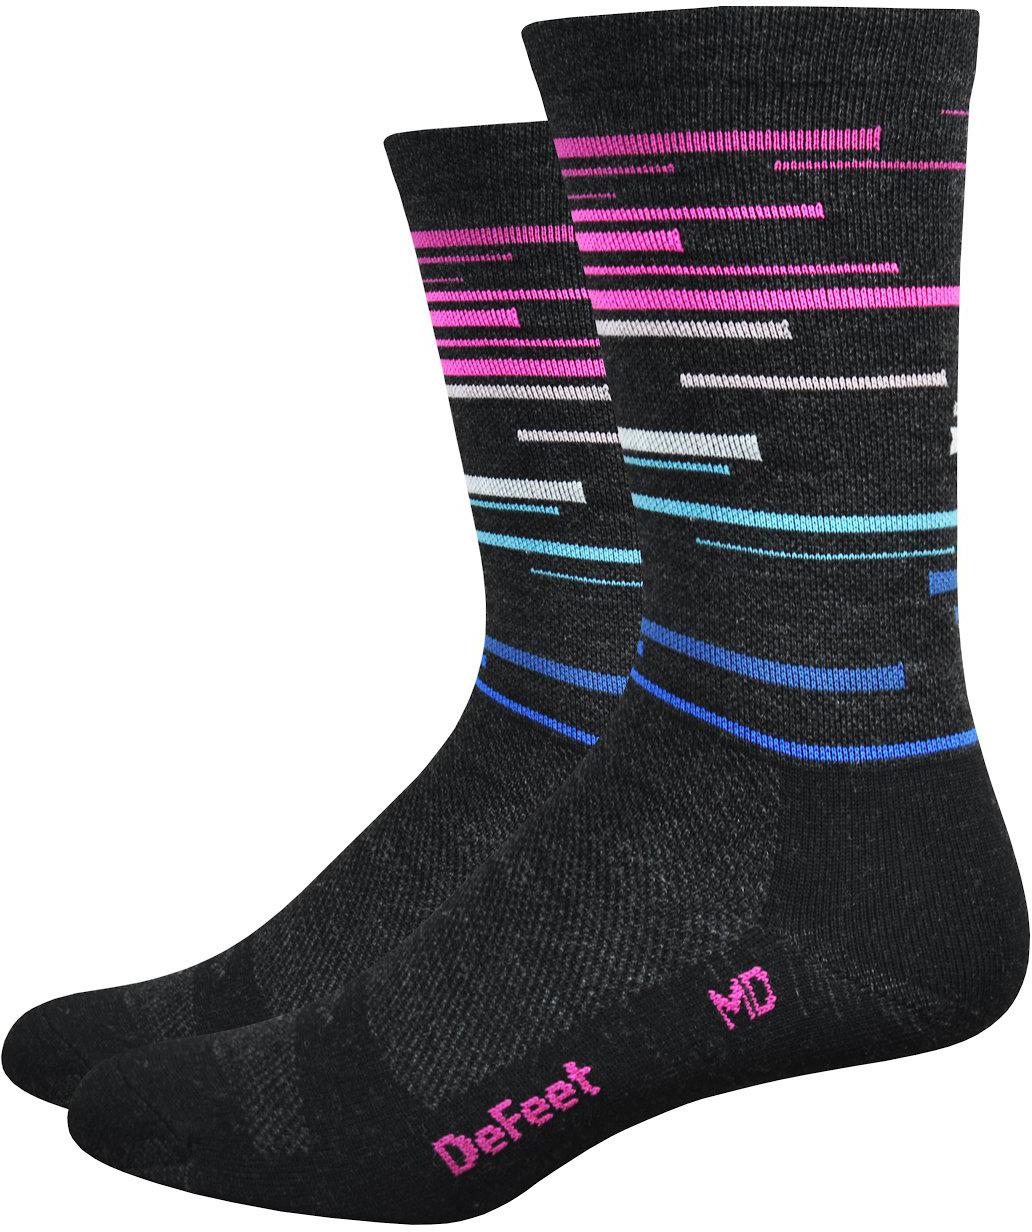 Defeet Wooleator 6 Dna Socks - Charcoal/blue/pink